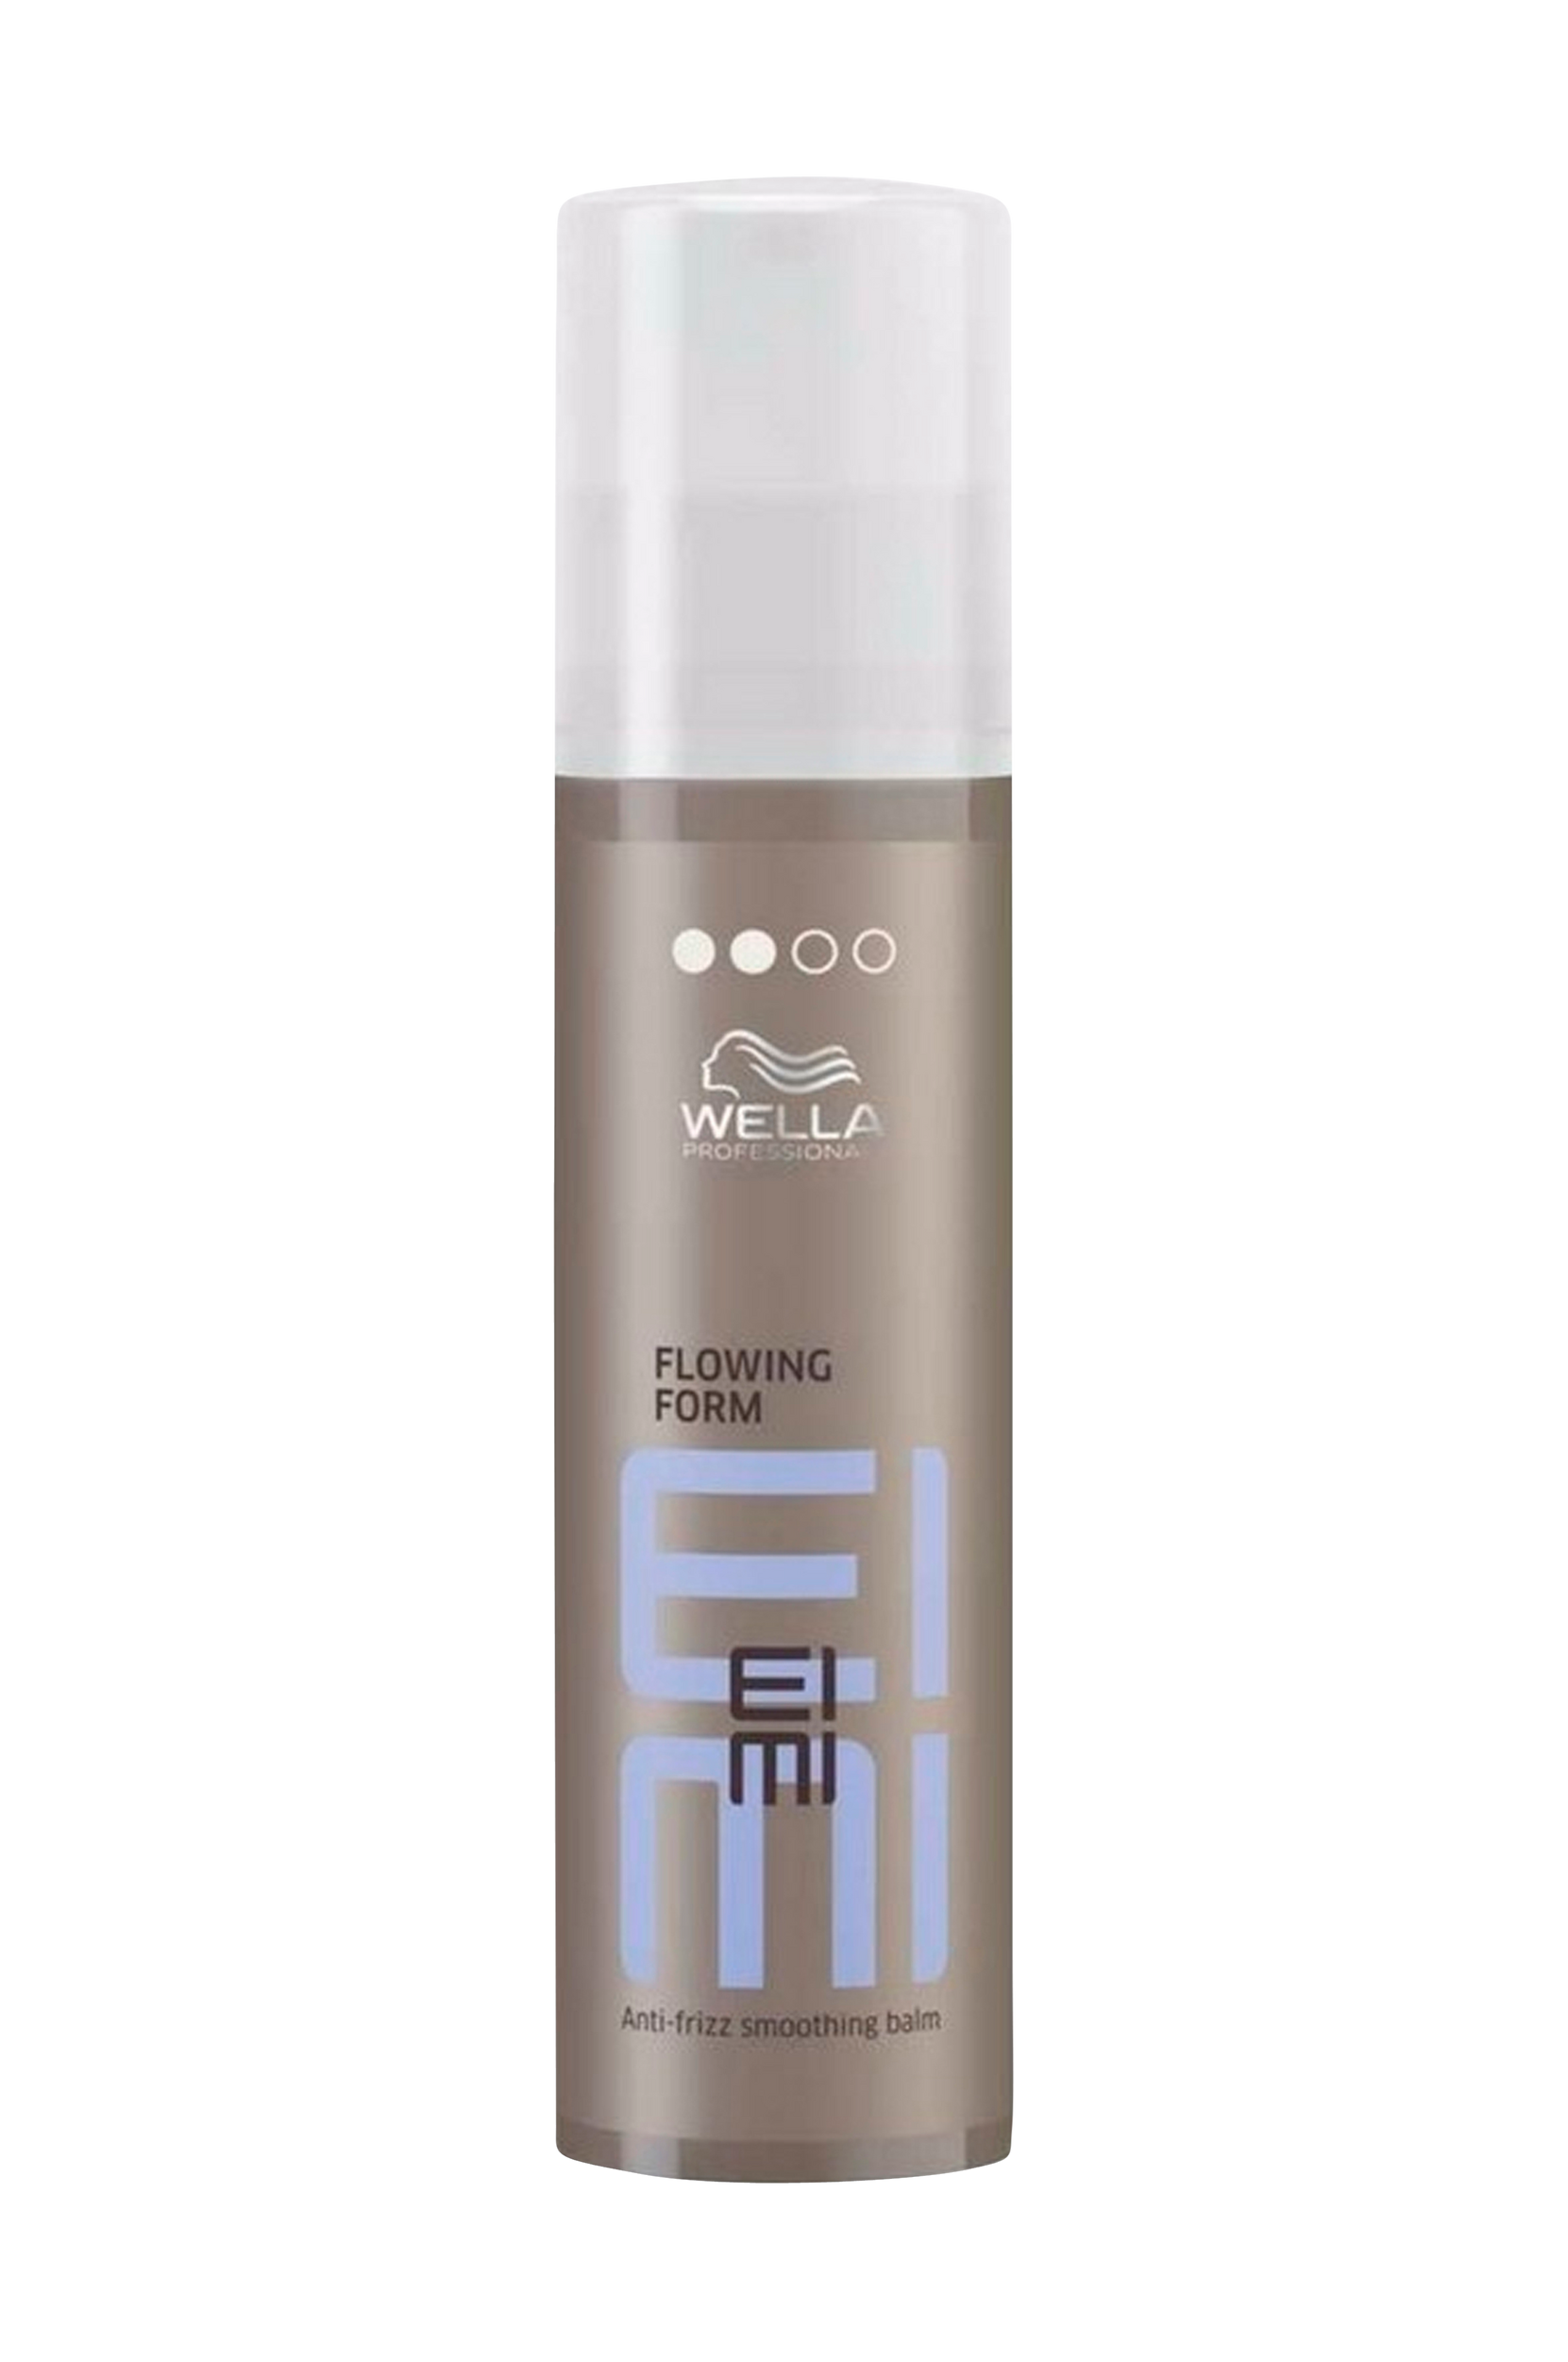 Wella Professionals - Flowing Form Anti Frizz Hair Balm100 ml